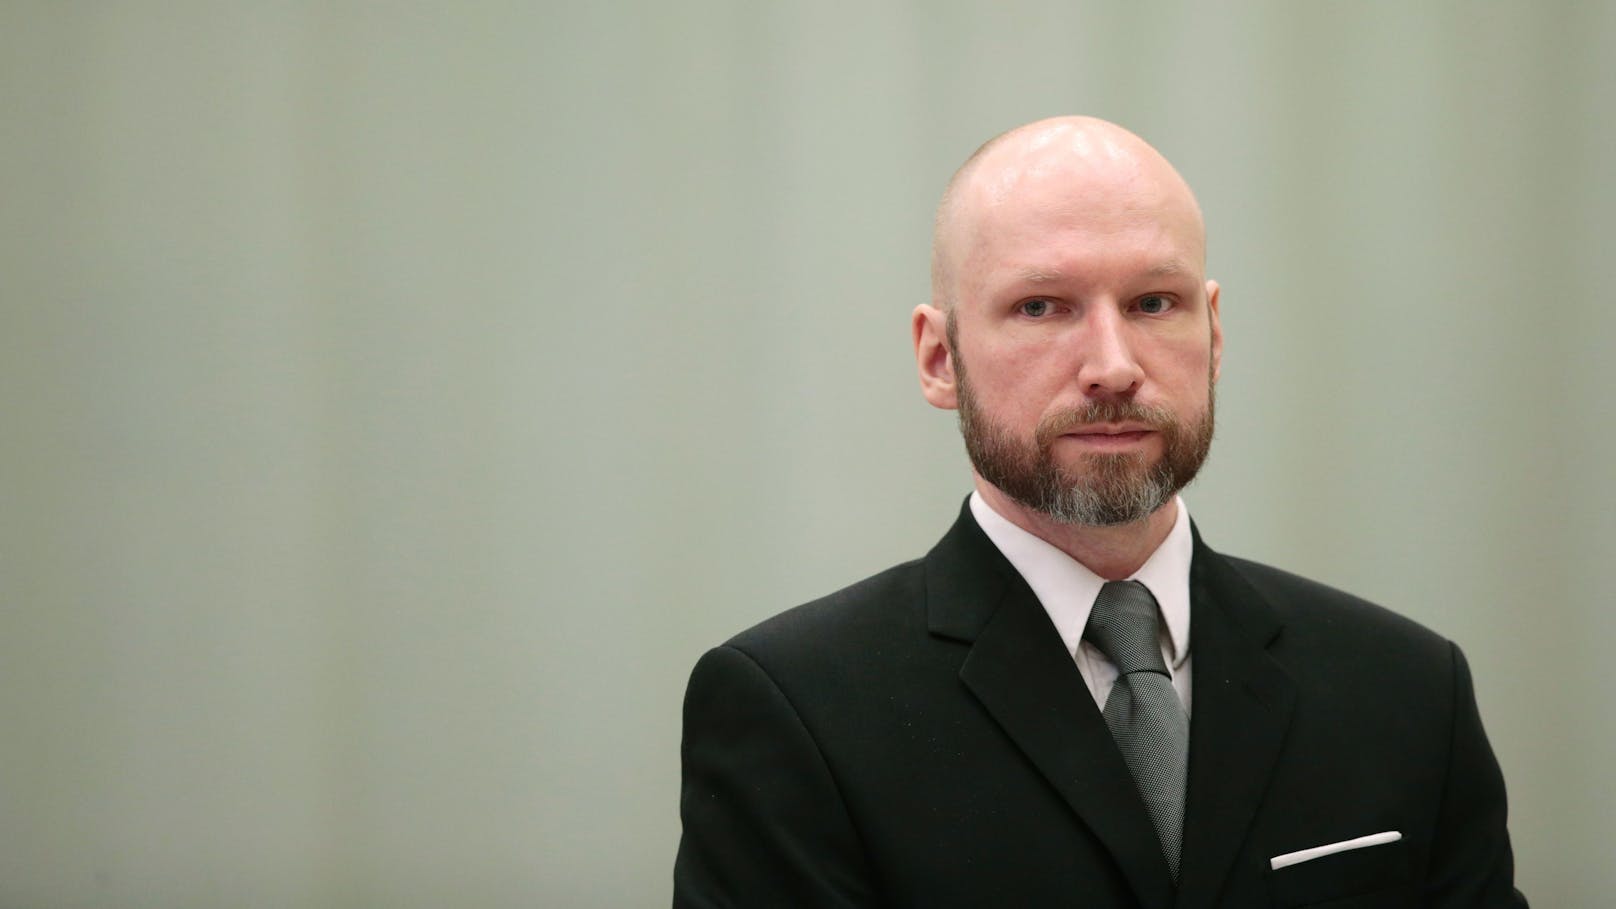 Anders Behring Breivik tötete 77 Menschen.